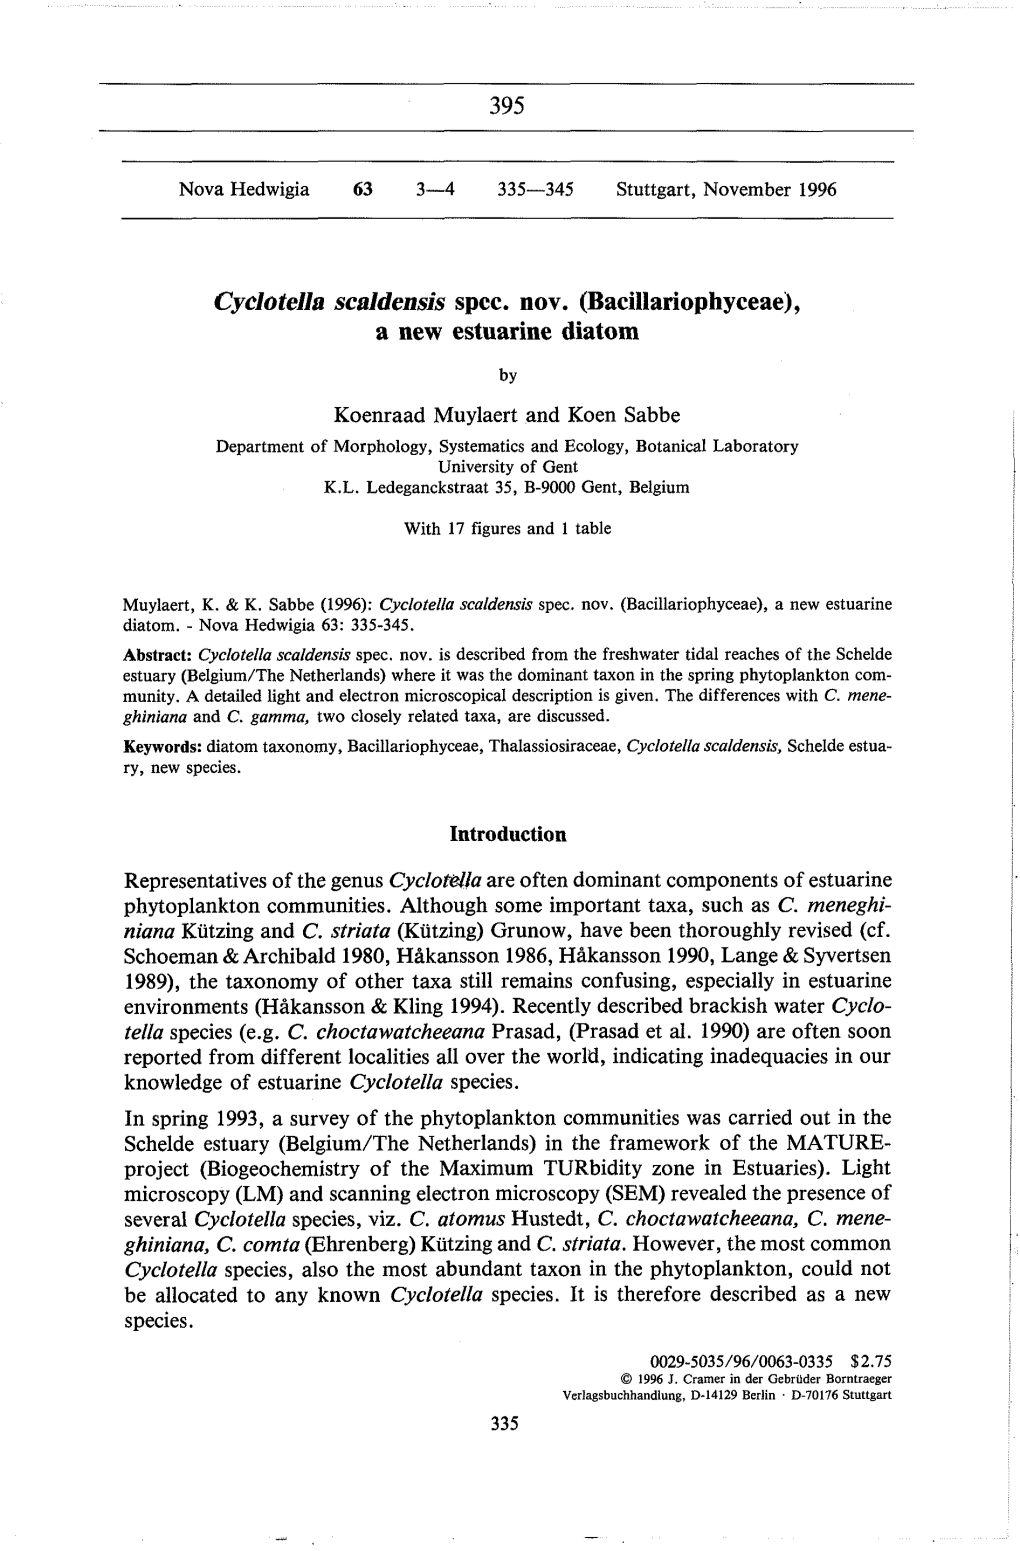 Cyclotella Scaldensis Spec. Nov. (Bacillariophyceae), a New Estuarine Diatom